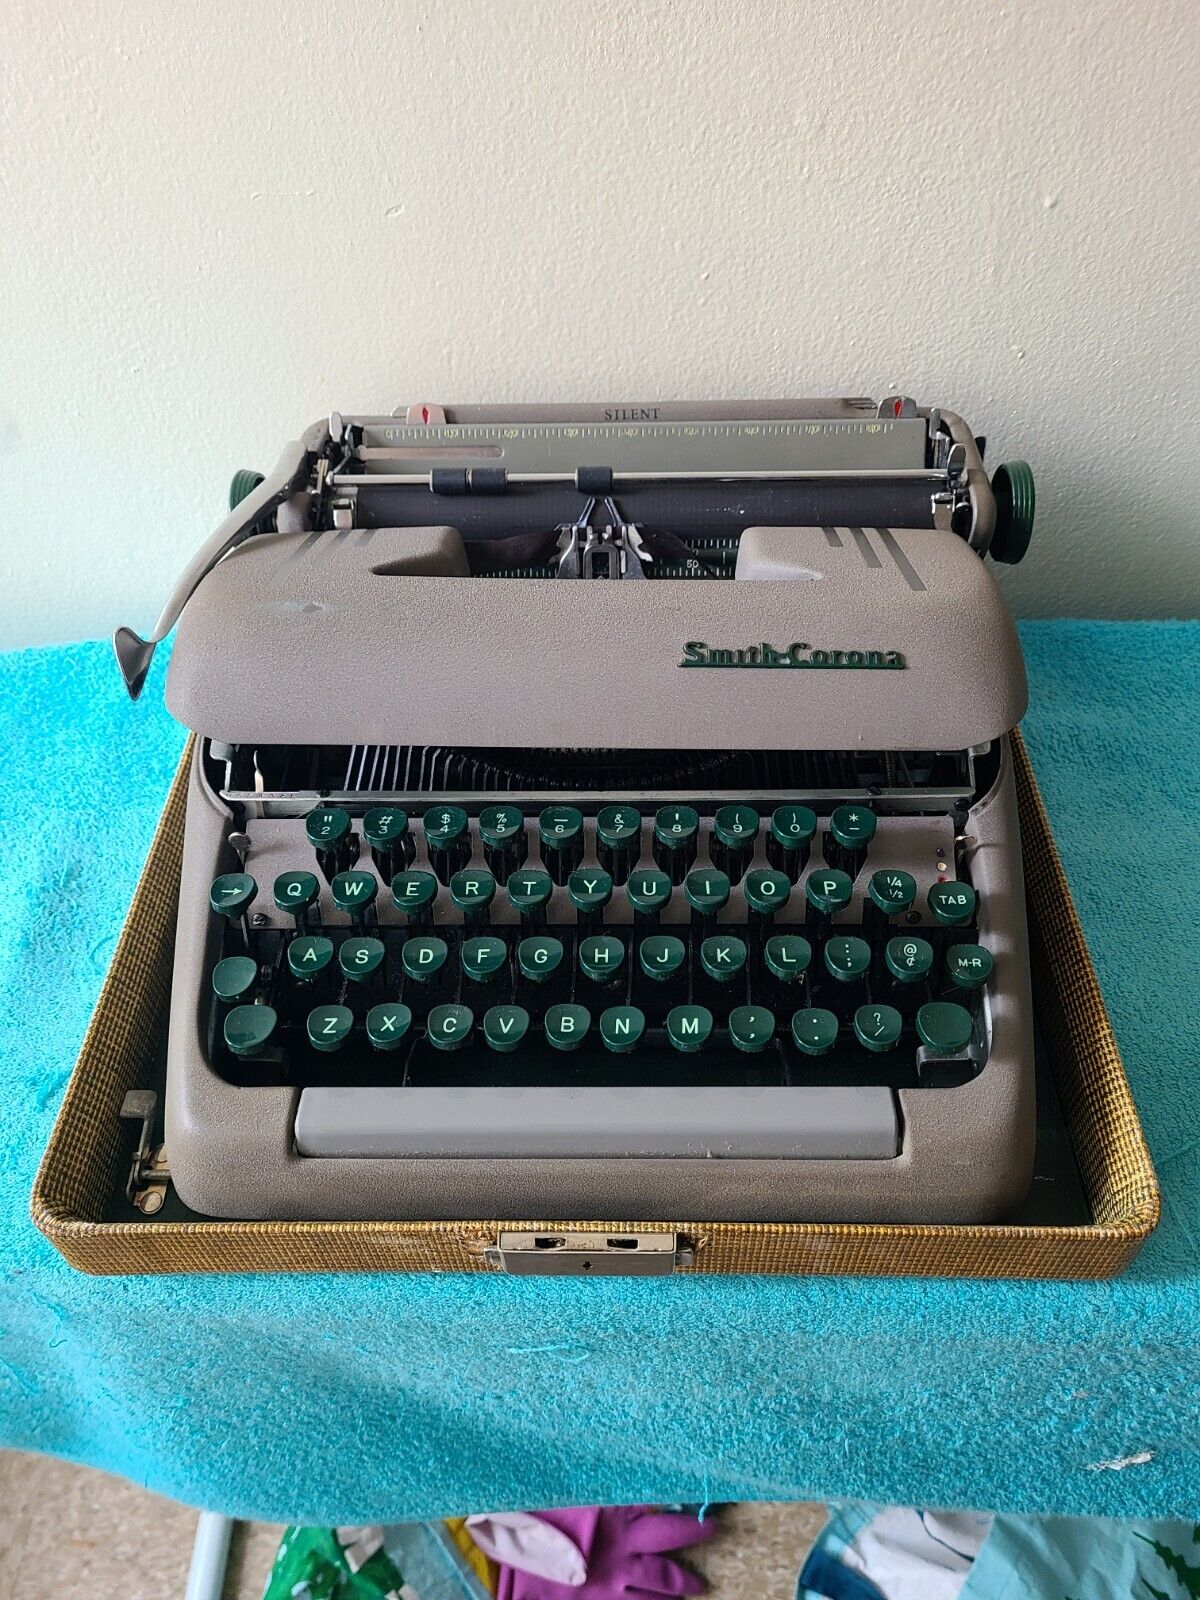 Smith Corona Silent Typewriter with Case 1950's / 